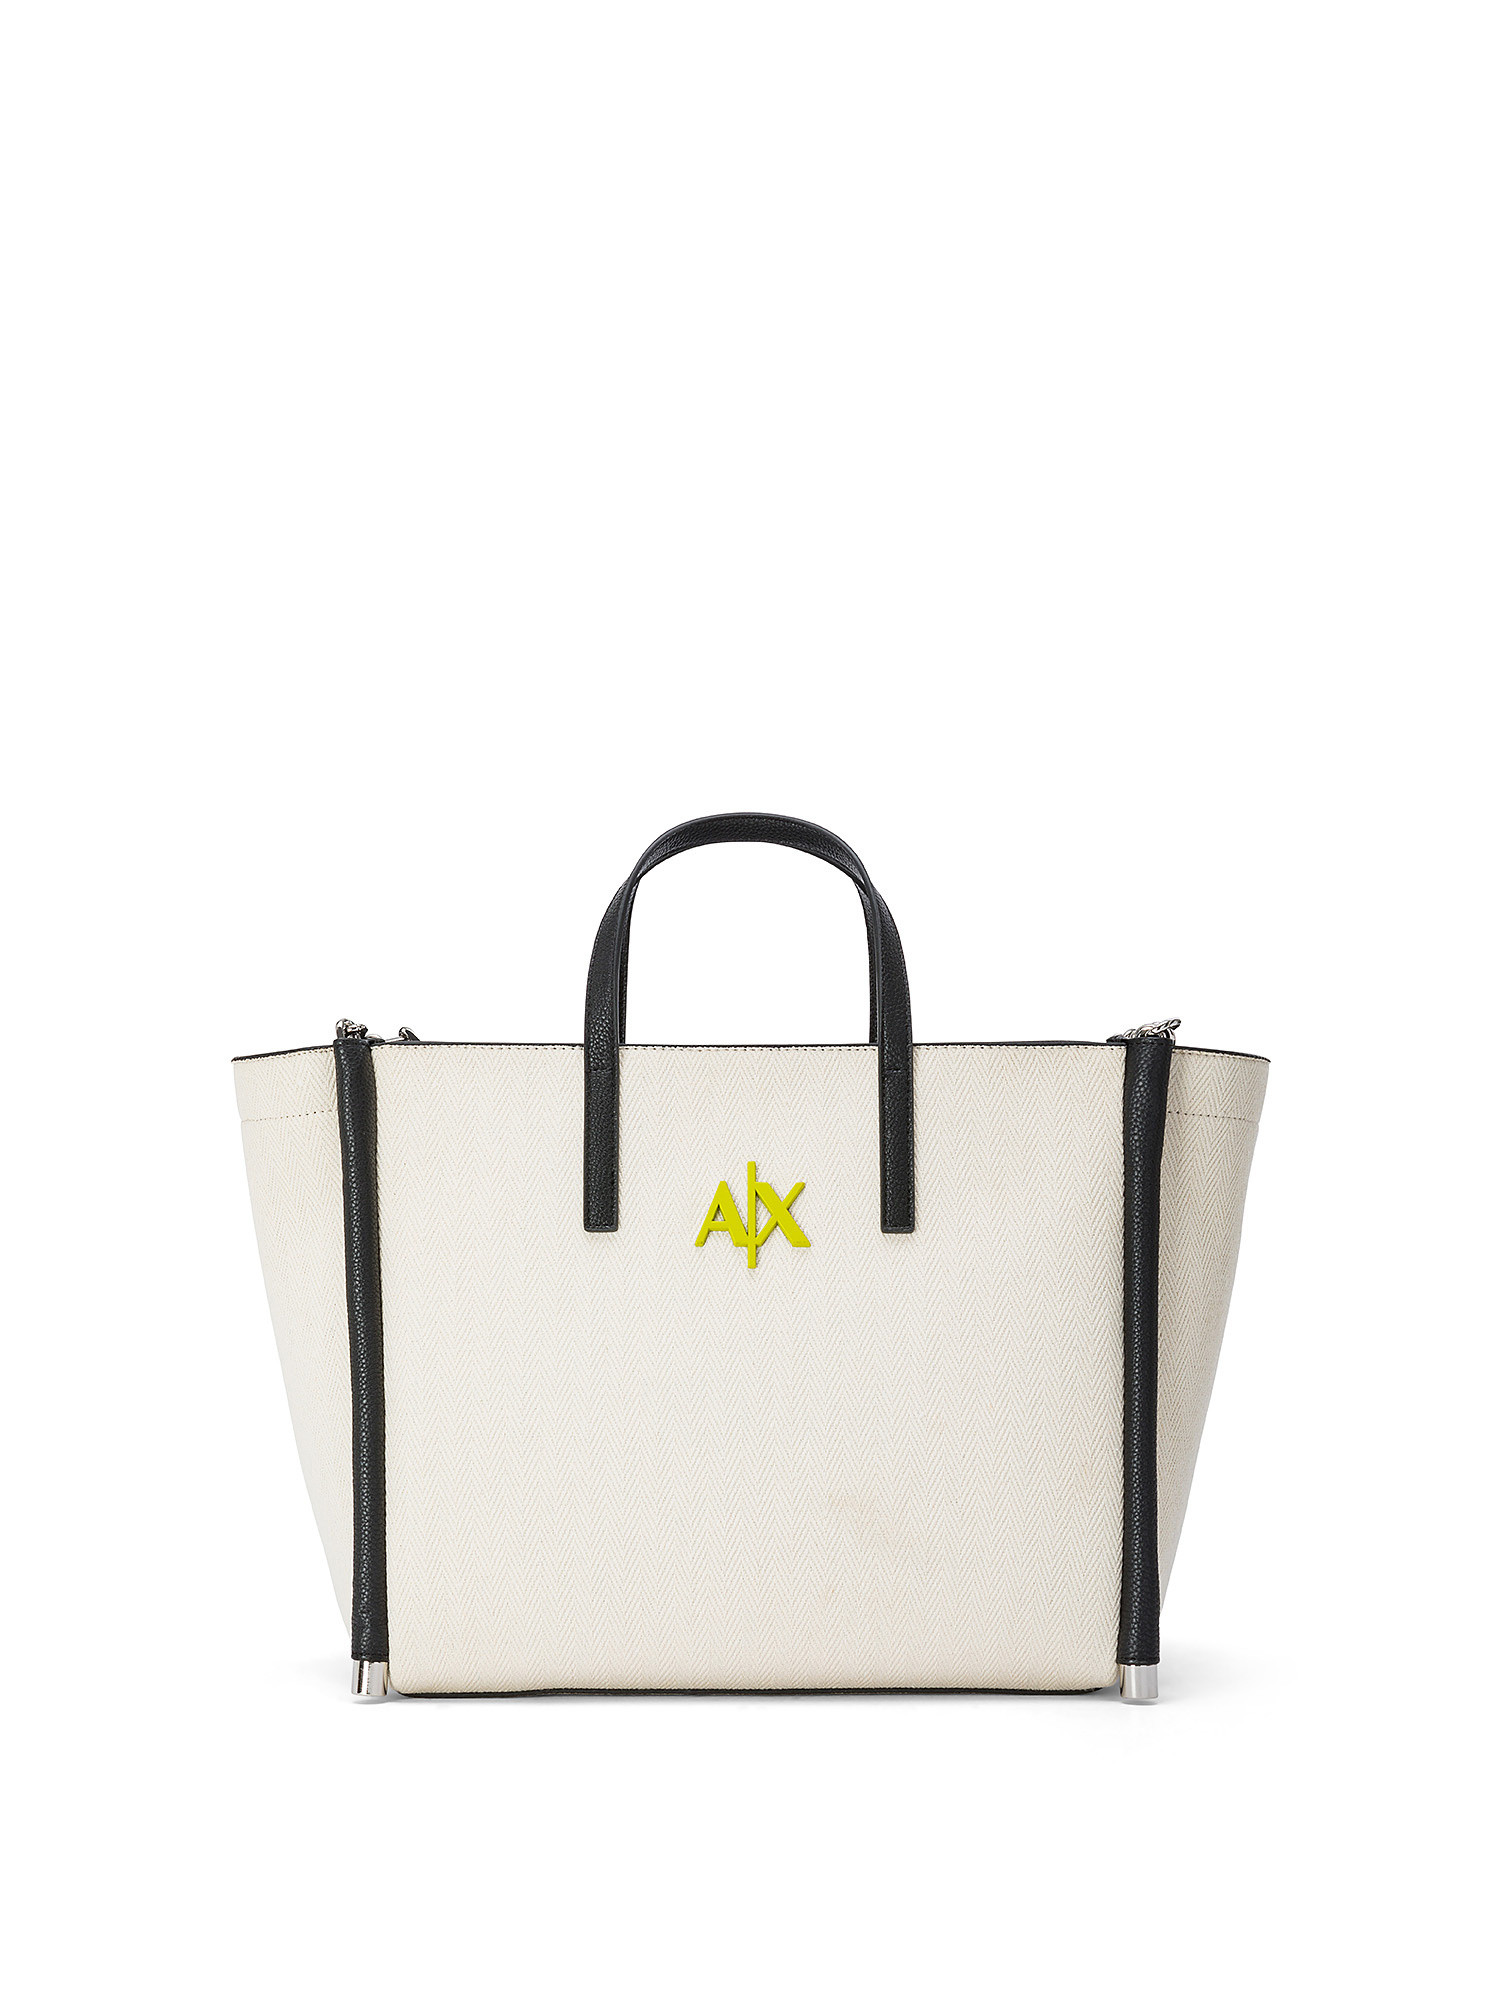 Armani Exchange - Shopper bag con logo, Beige chiaro, large image number 0